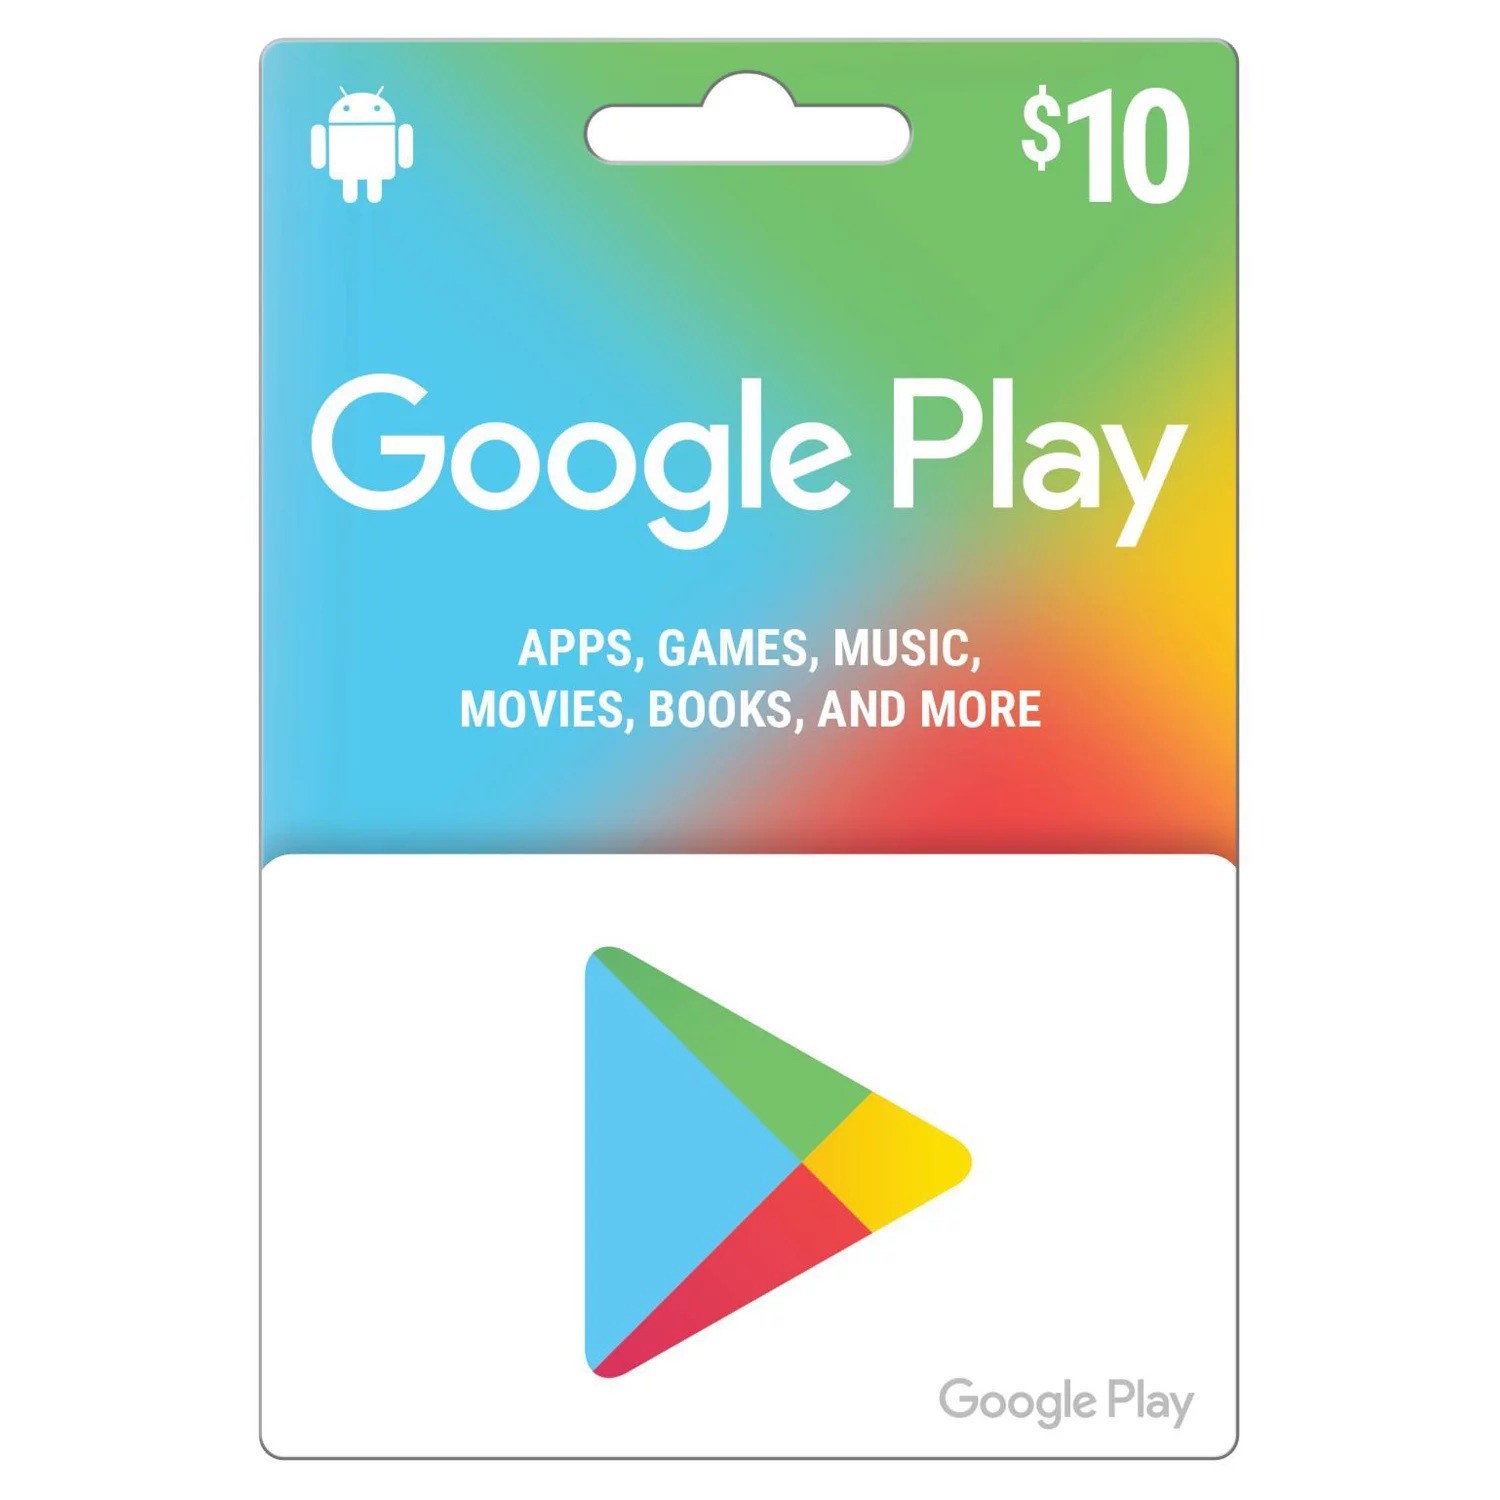 100 google play. Гугл плей. Карта Google Play. Подарочная карта Google Play. Подарочная карта гугол рлей.